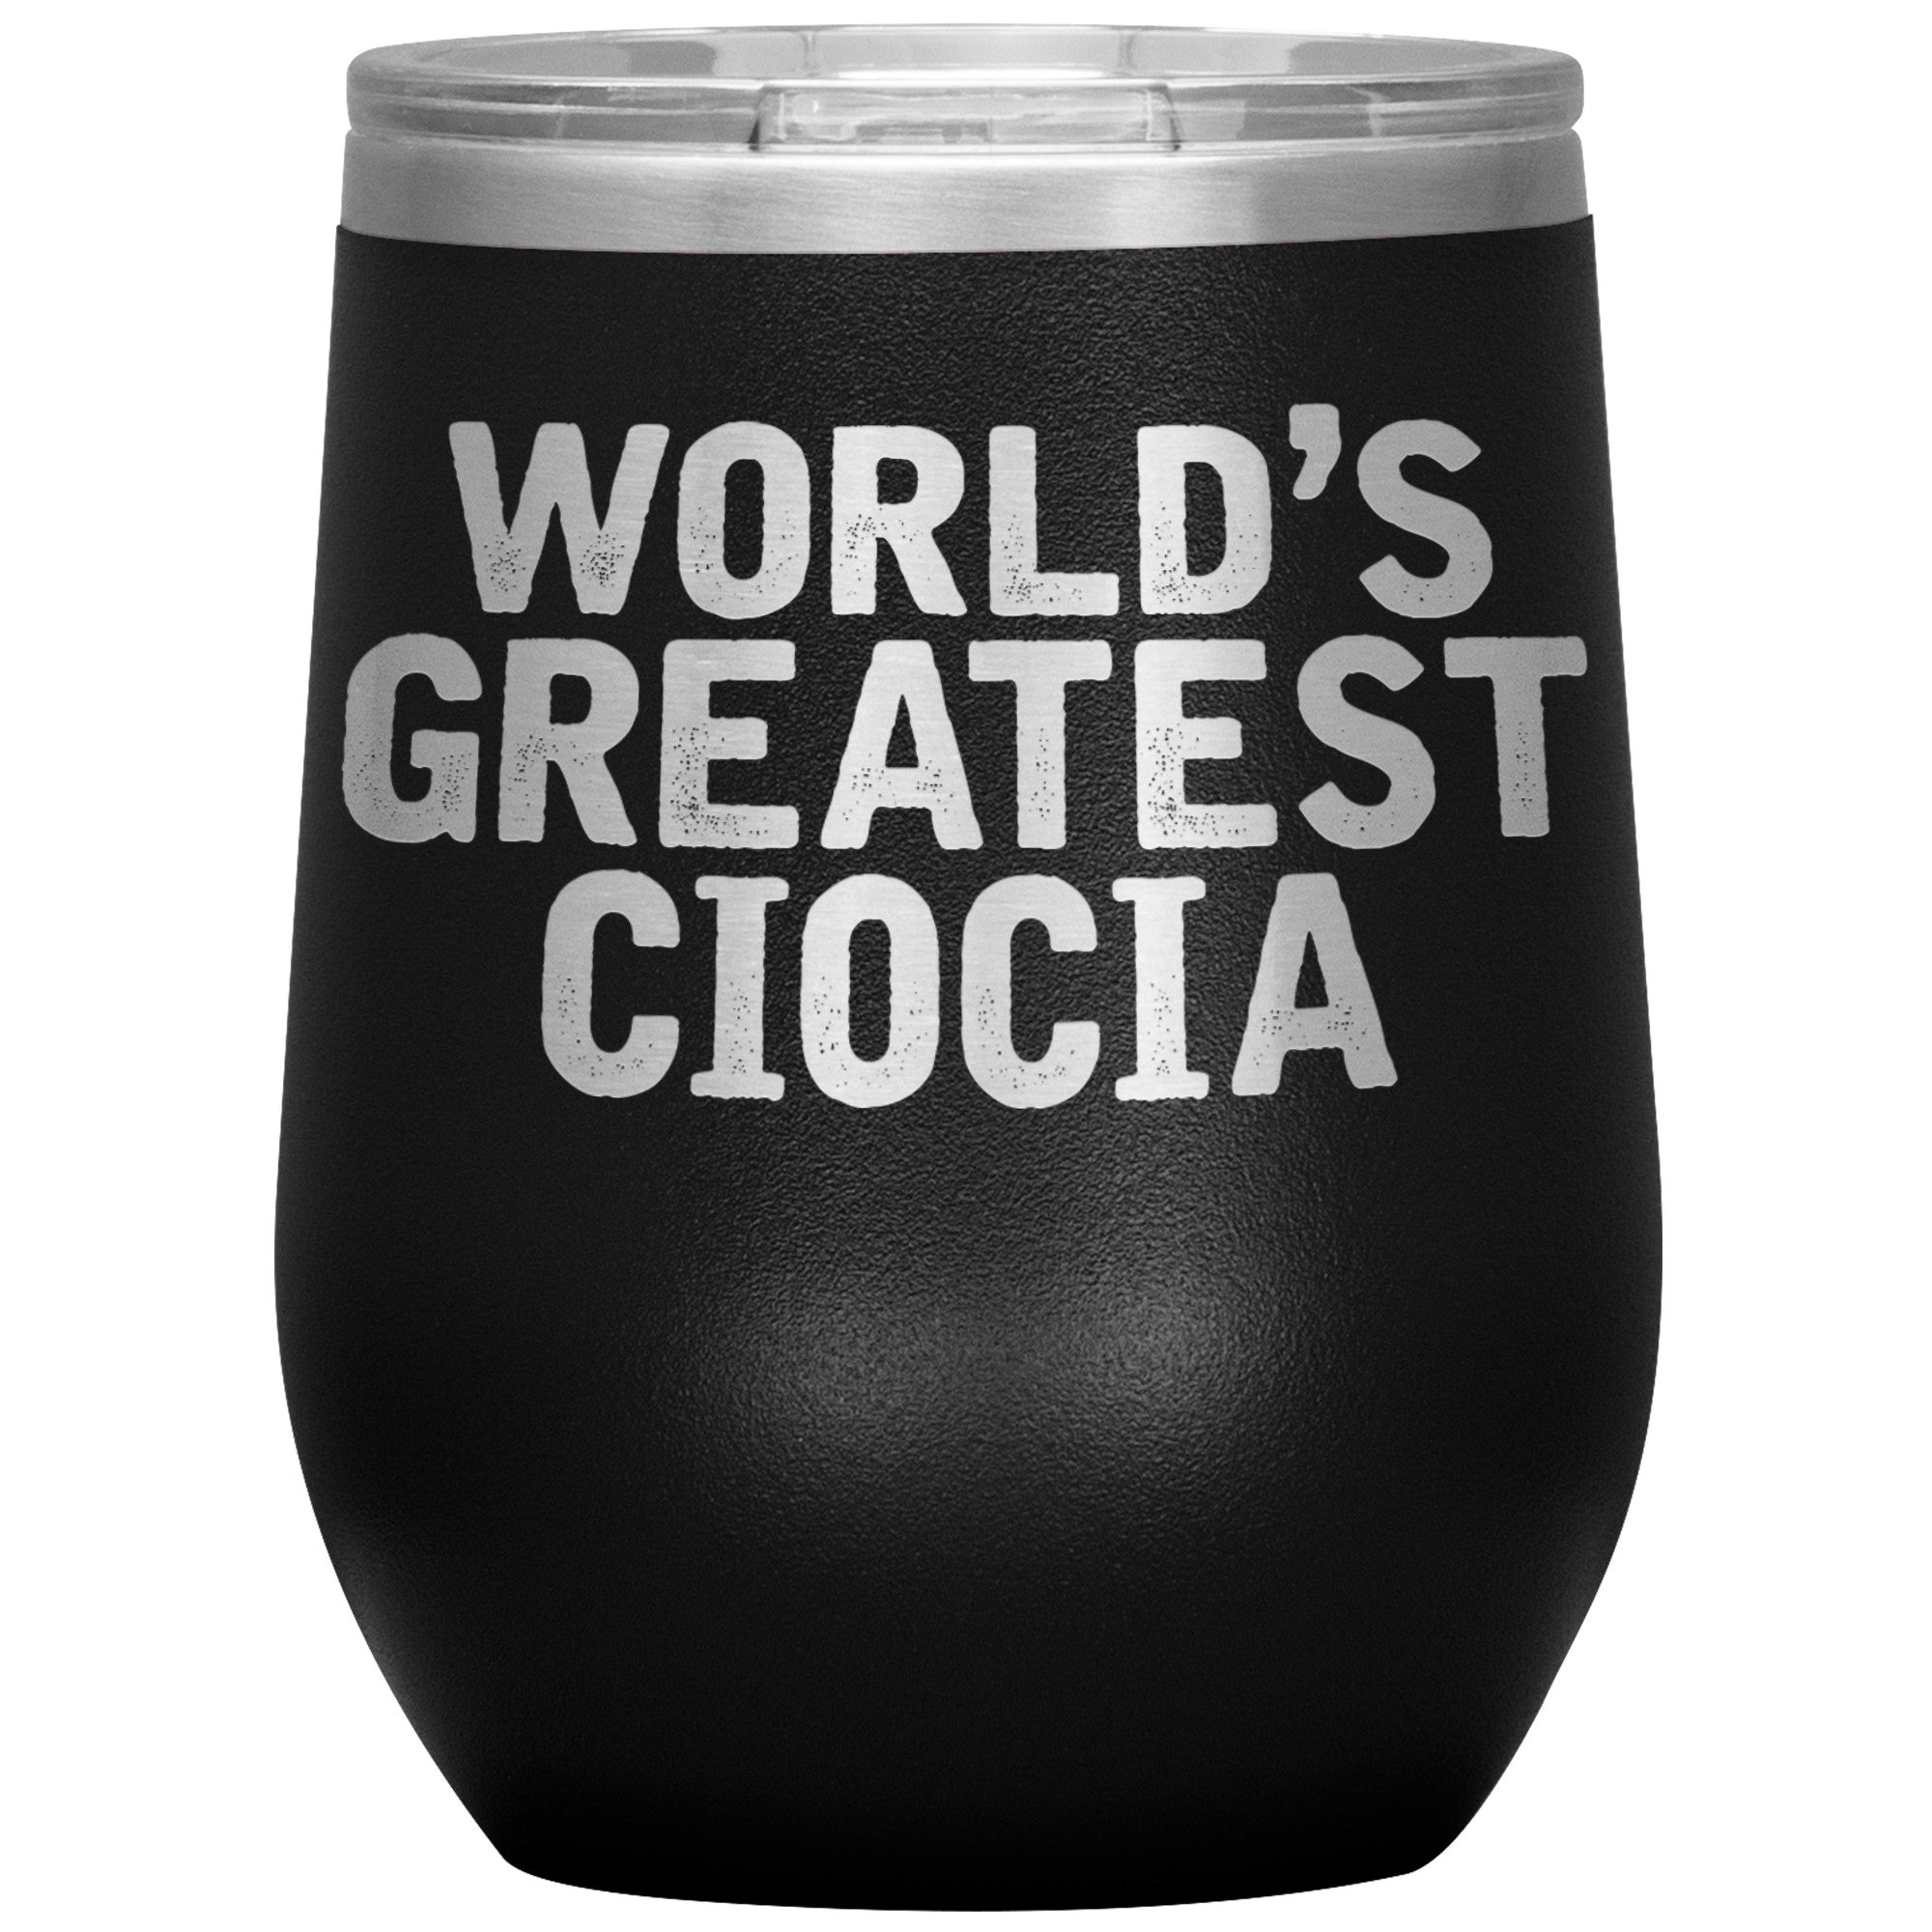 World's Greatest Ciocia Insulated Wine Tumbler Tumblers teelaunch Black  